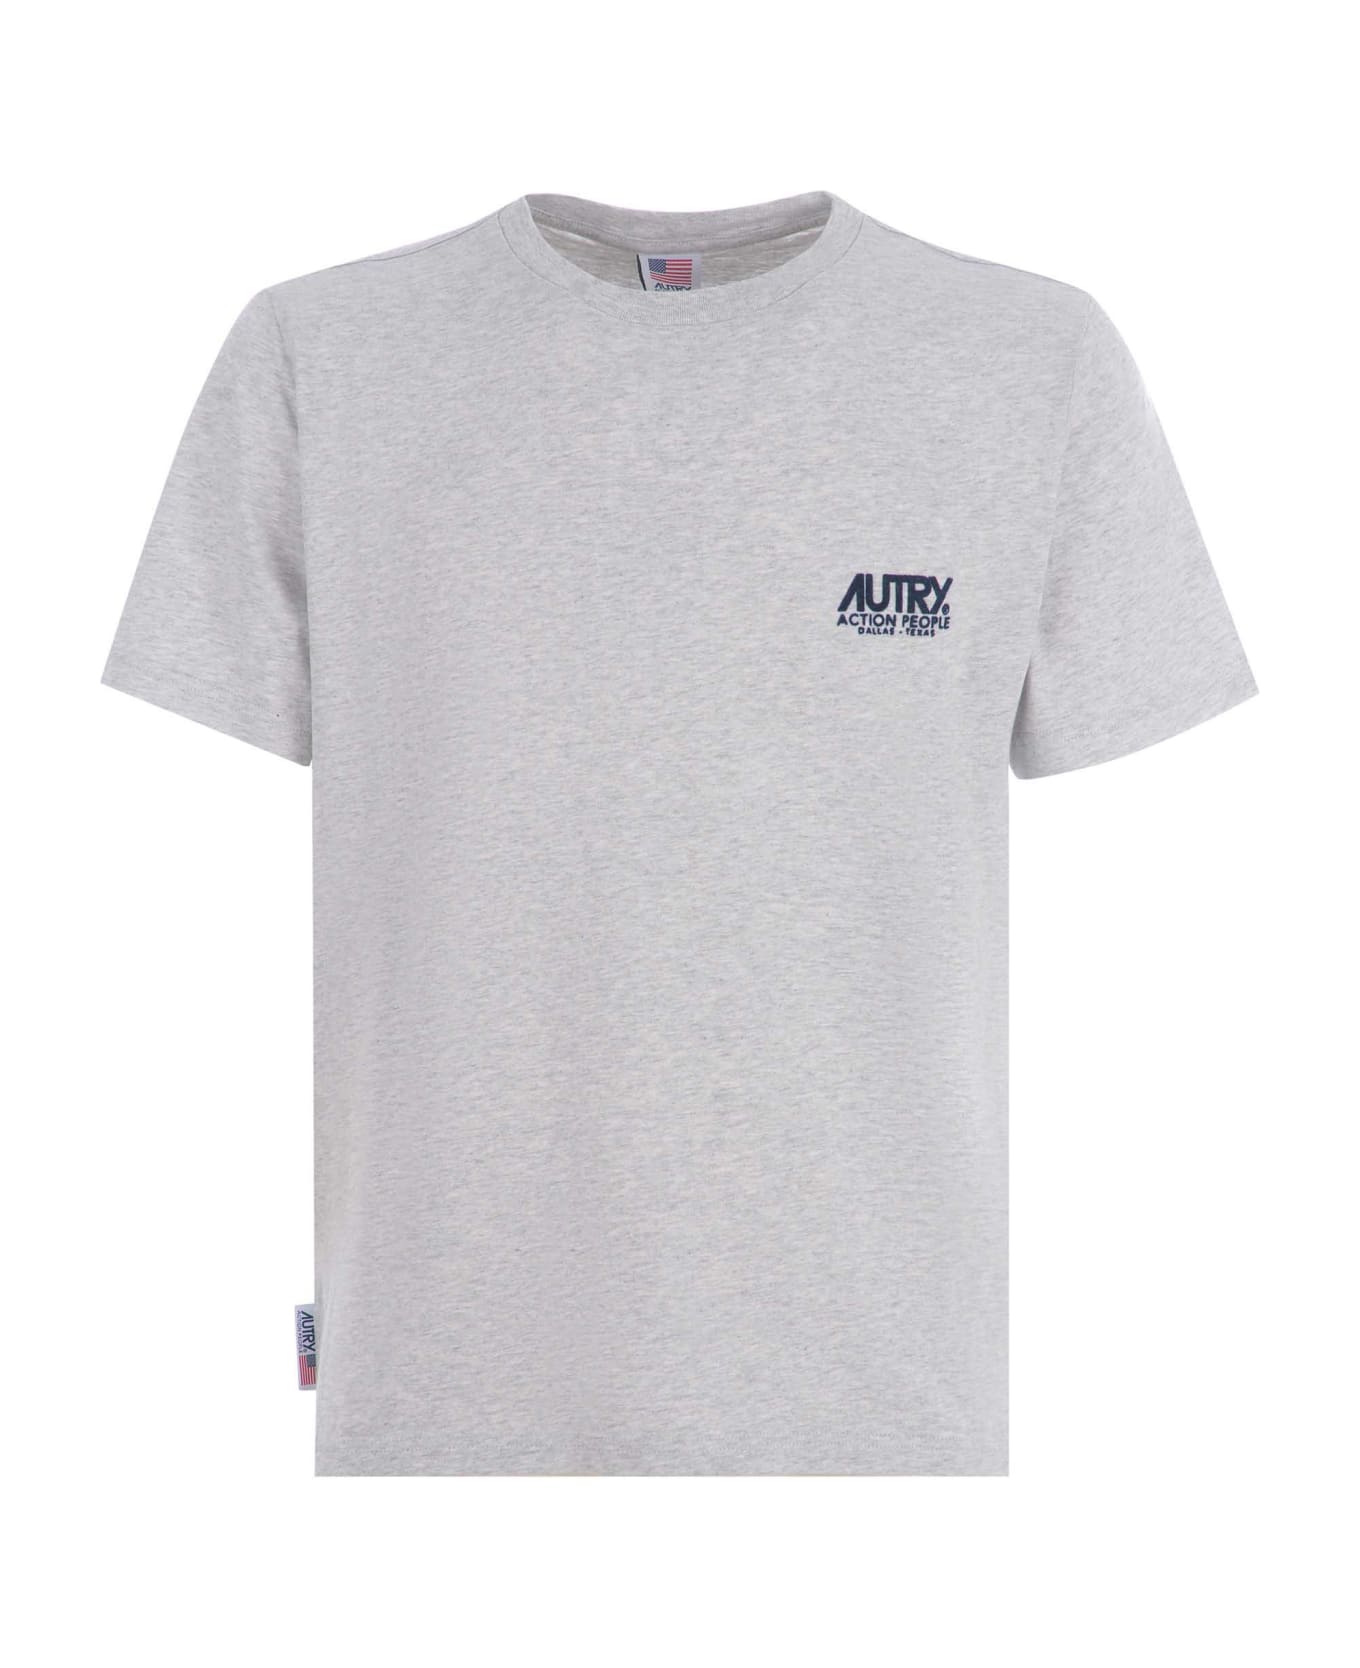 Autry T-shirt Autry In Cotton - Grigio シャツ